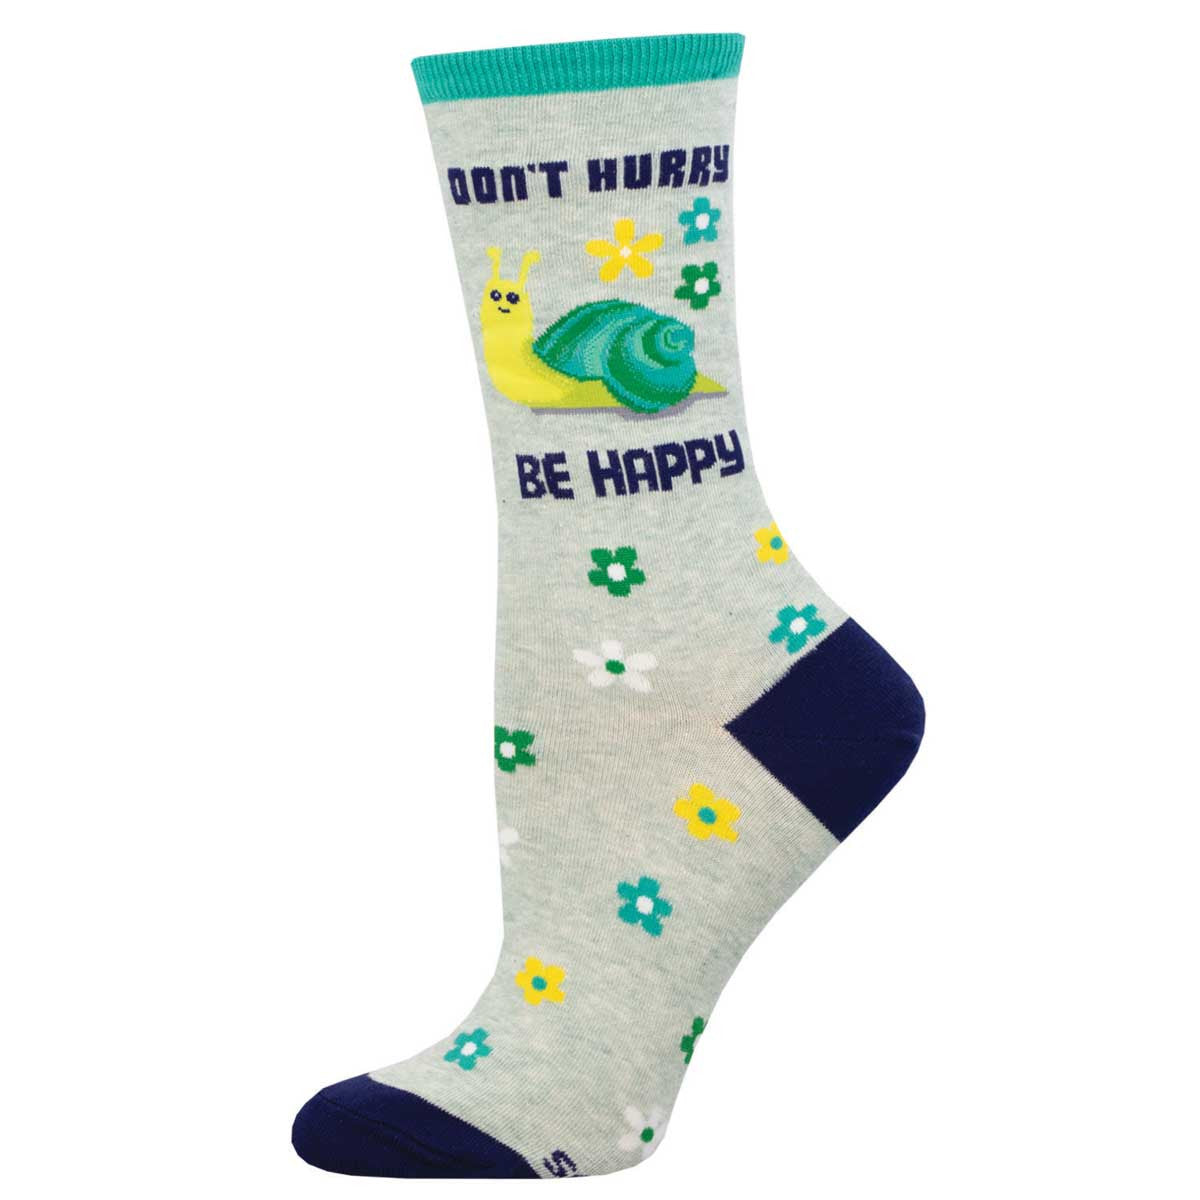 Don't Worry Be Happy Women's Socks